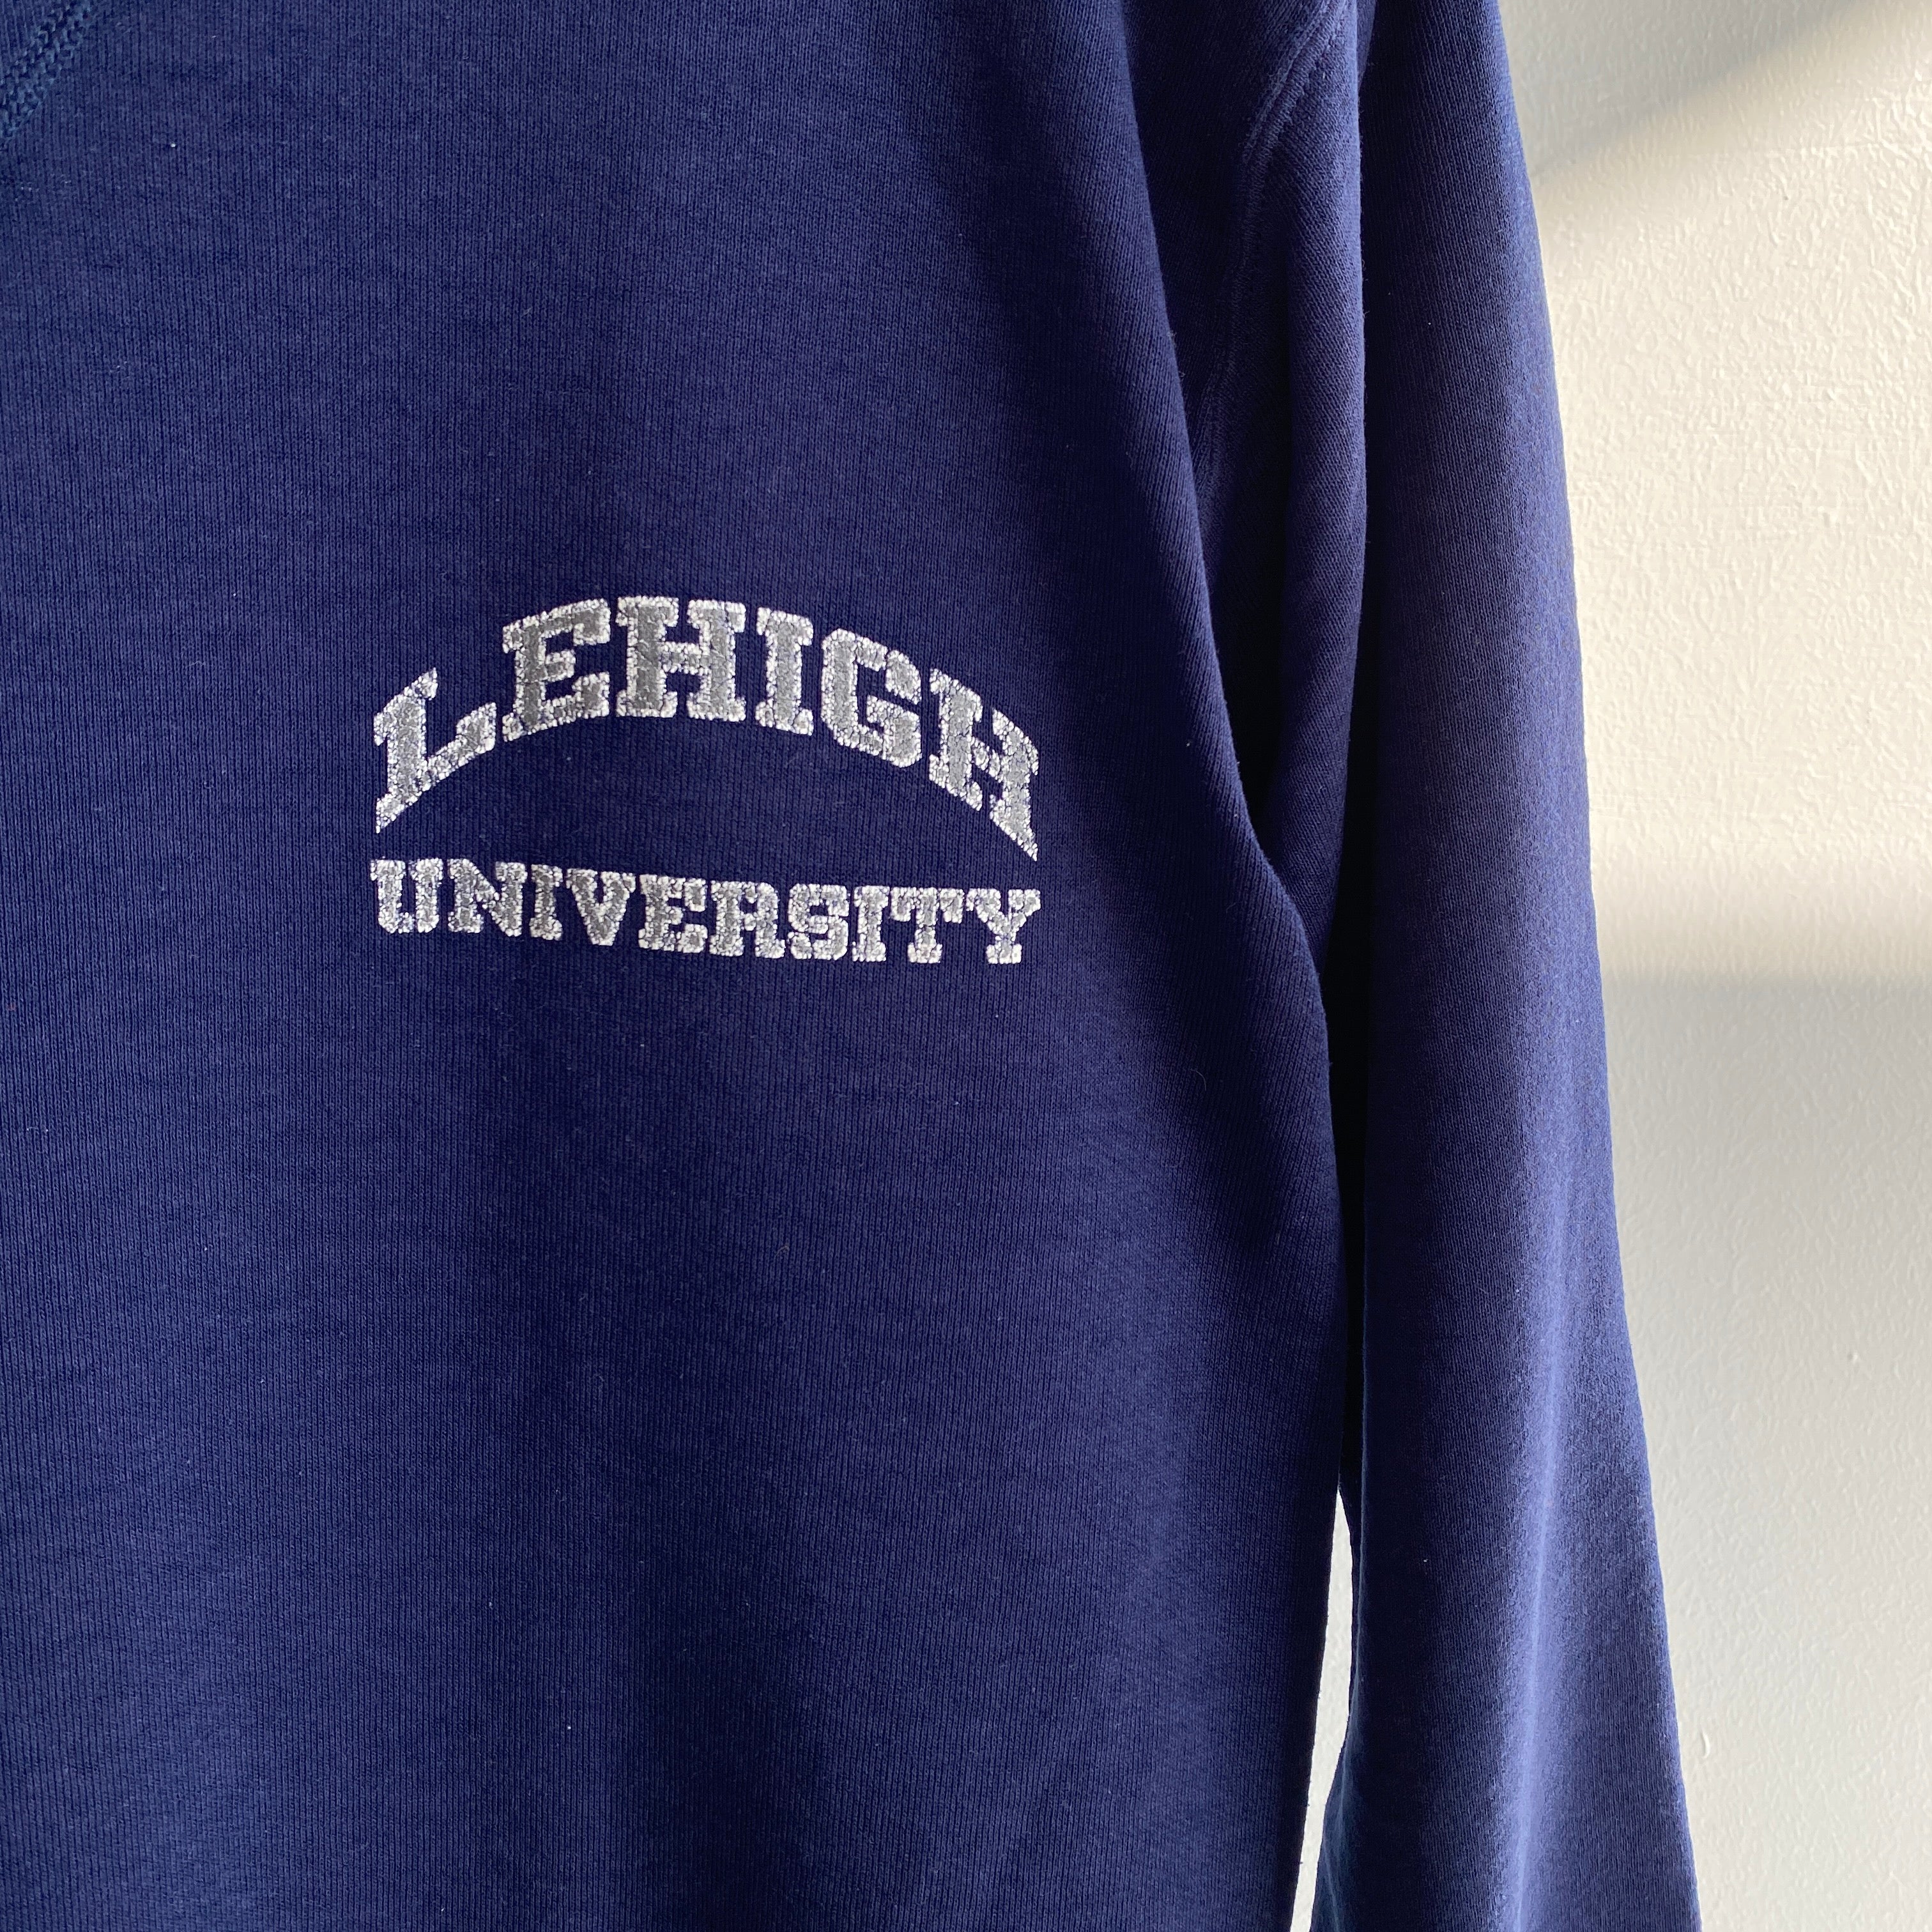 1980s DESTROYED Lehigh University College Sweatshirt